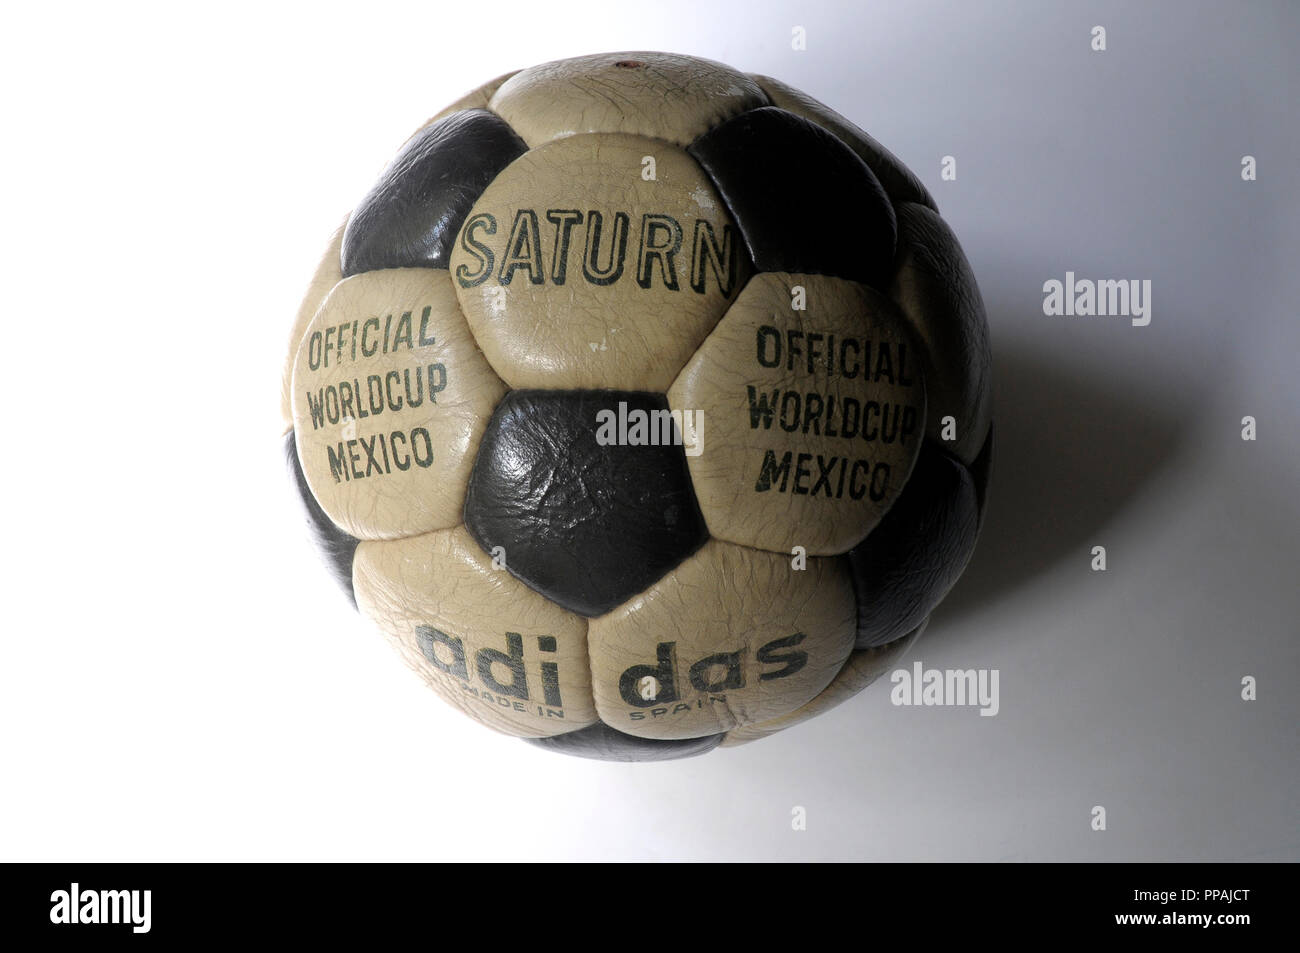 Adidas ballon de football en cuir vintage. Fabriqué en Espagne, SATURNE  Worldcup officiel au Mexique. Ballon de football, pelote basque de futbol  Photo Stock - Alamy